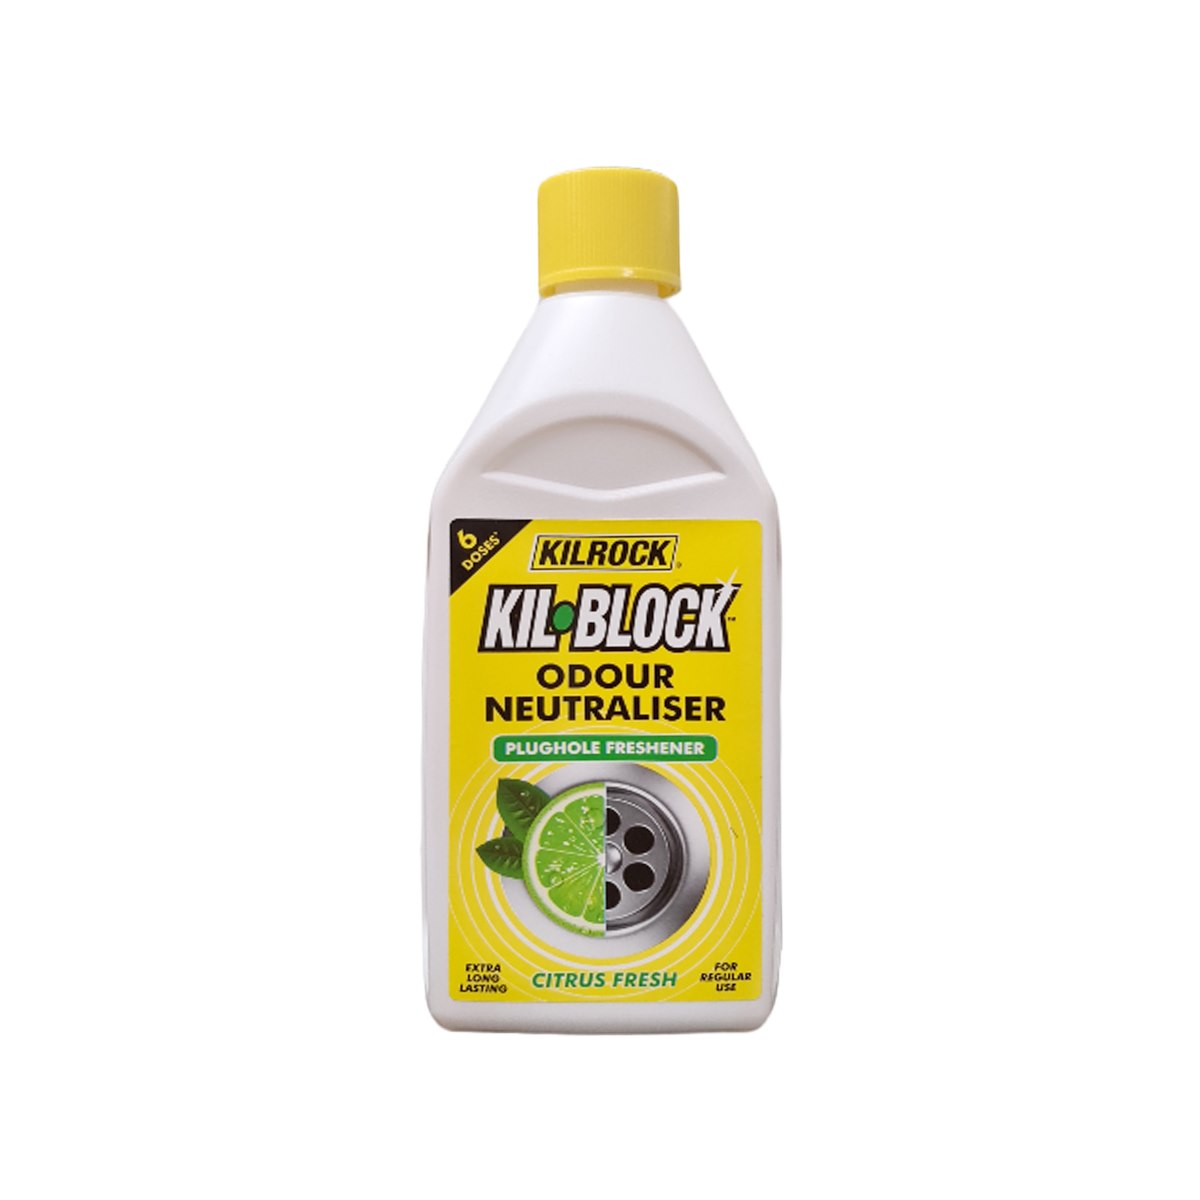 Kilrock Kil-Block Odour Neutraliser Plughole Freshener Citrus Fresh 500ml